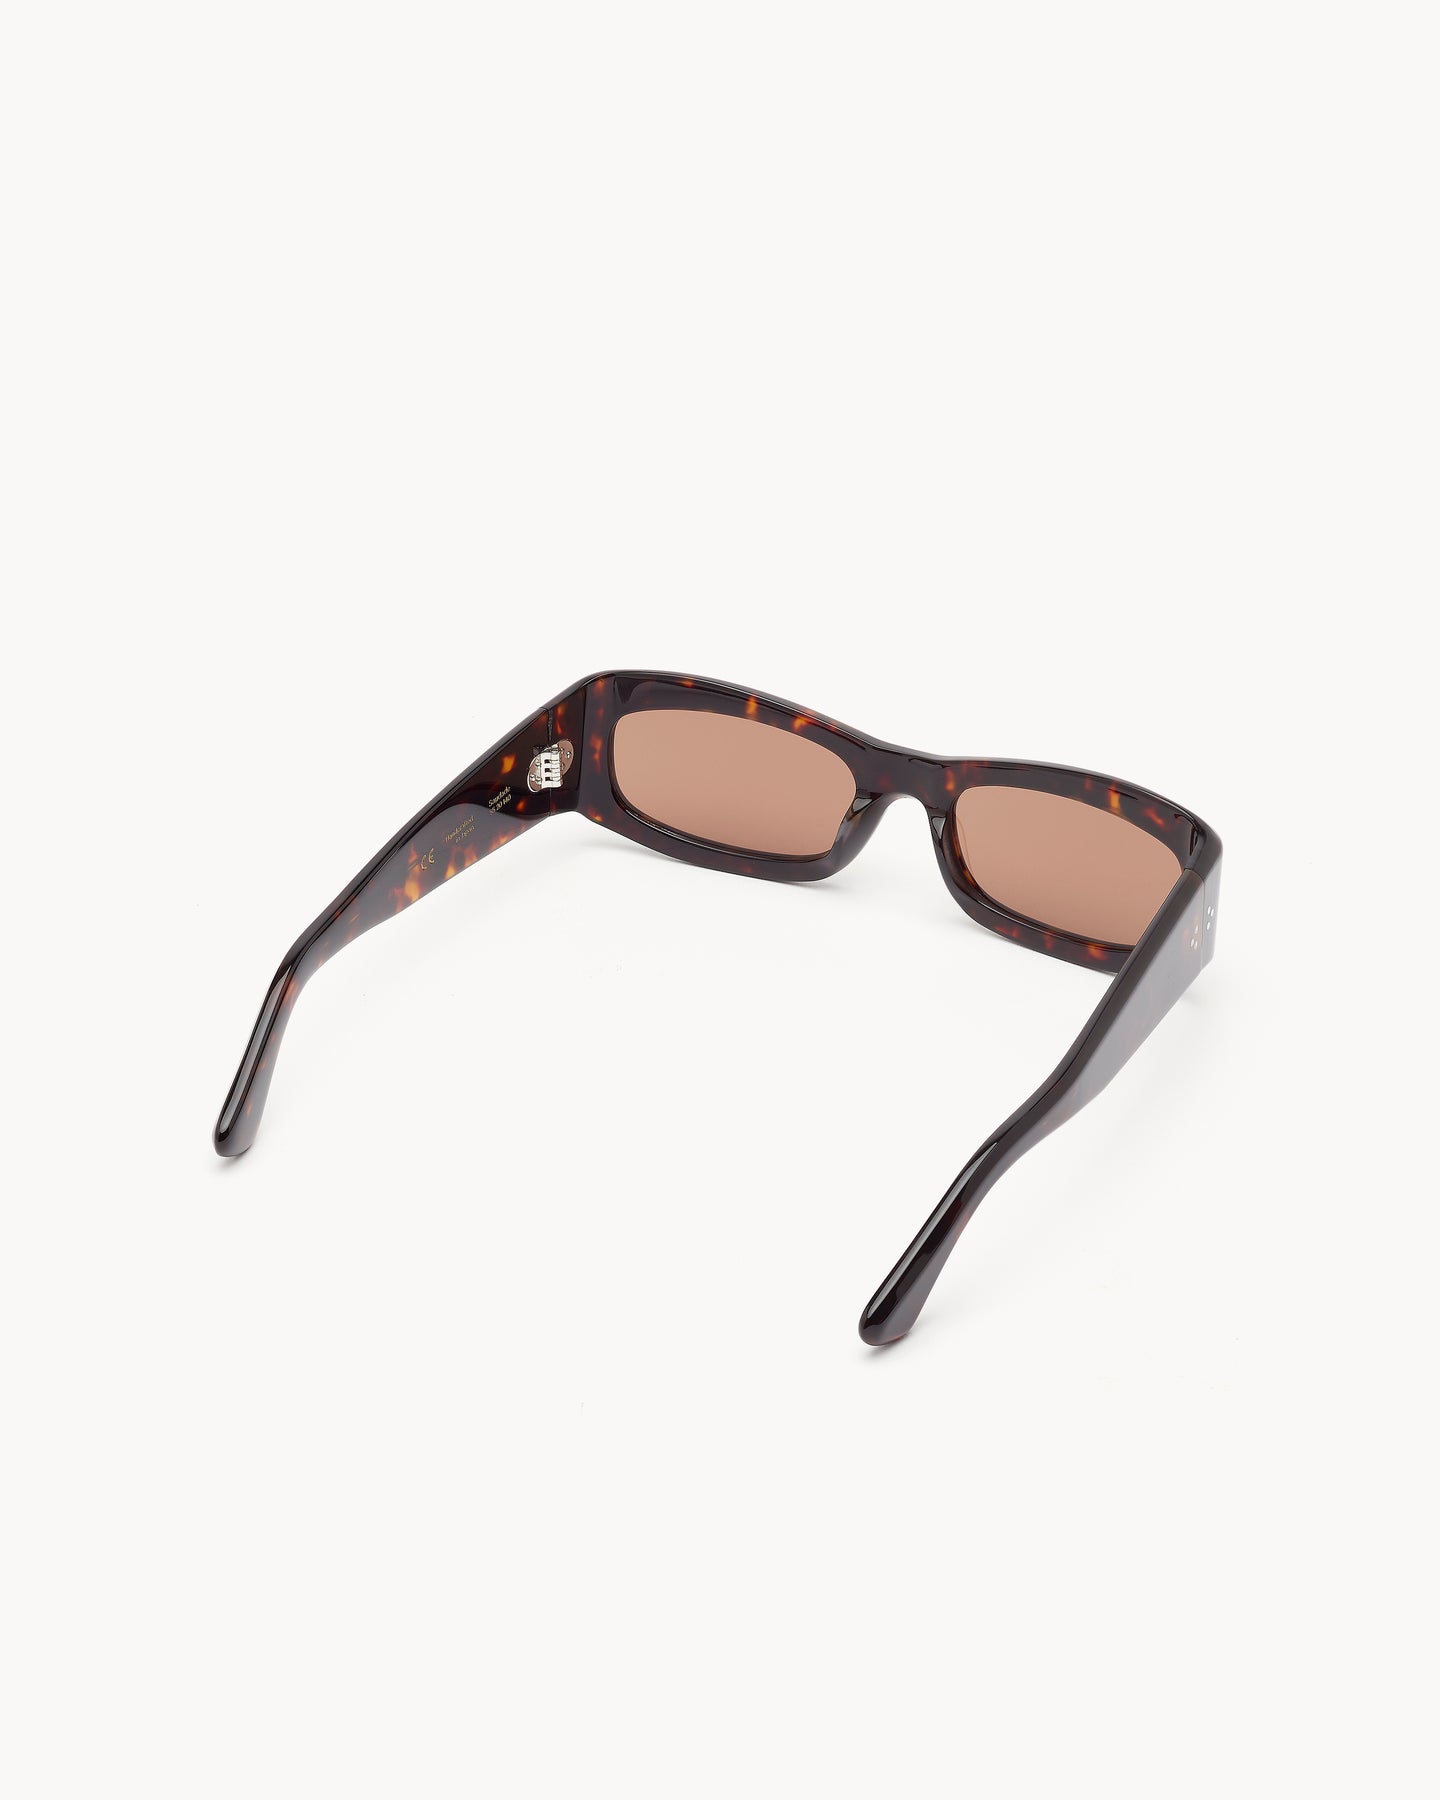 Port Tanger Saudade Sunglasses in Dark Tortoise Acetate and Tobacco Lenses 3